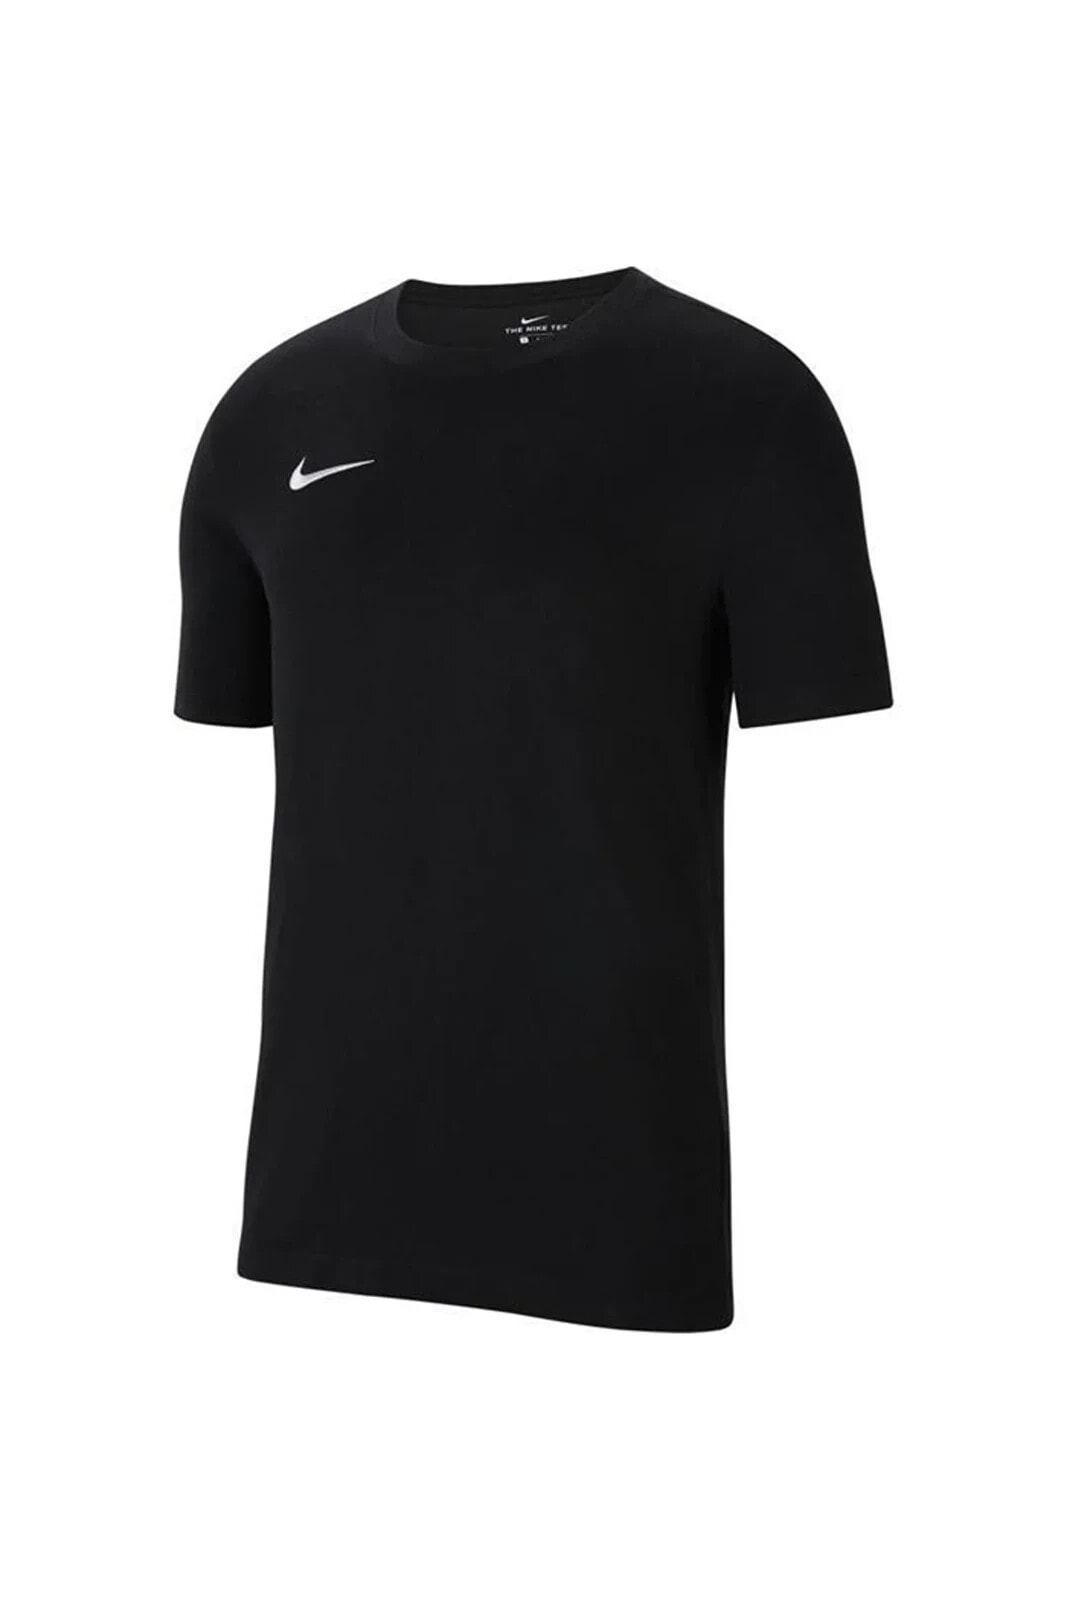 Dri-fit Park20 Ss Tee Erkek Siyah Futbol Tişört